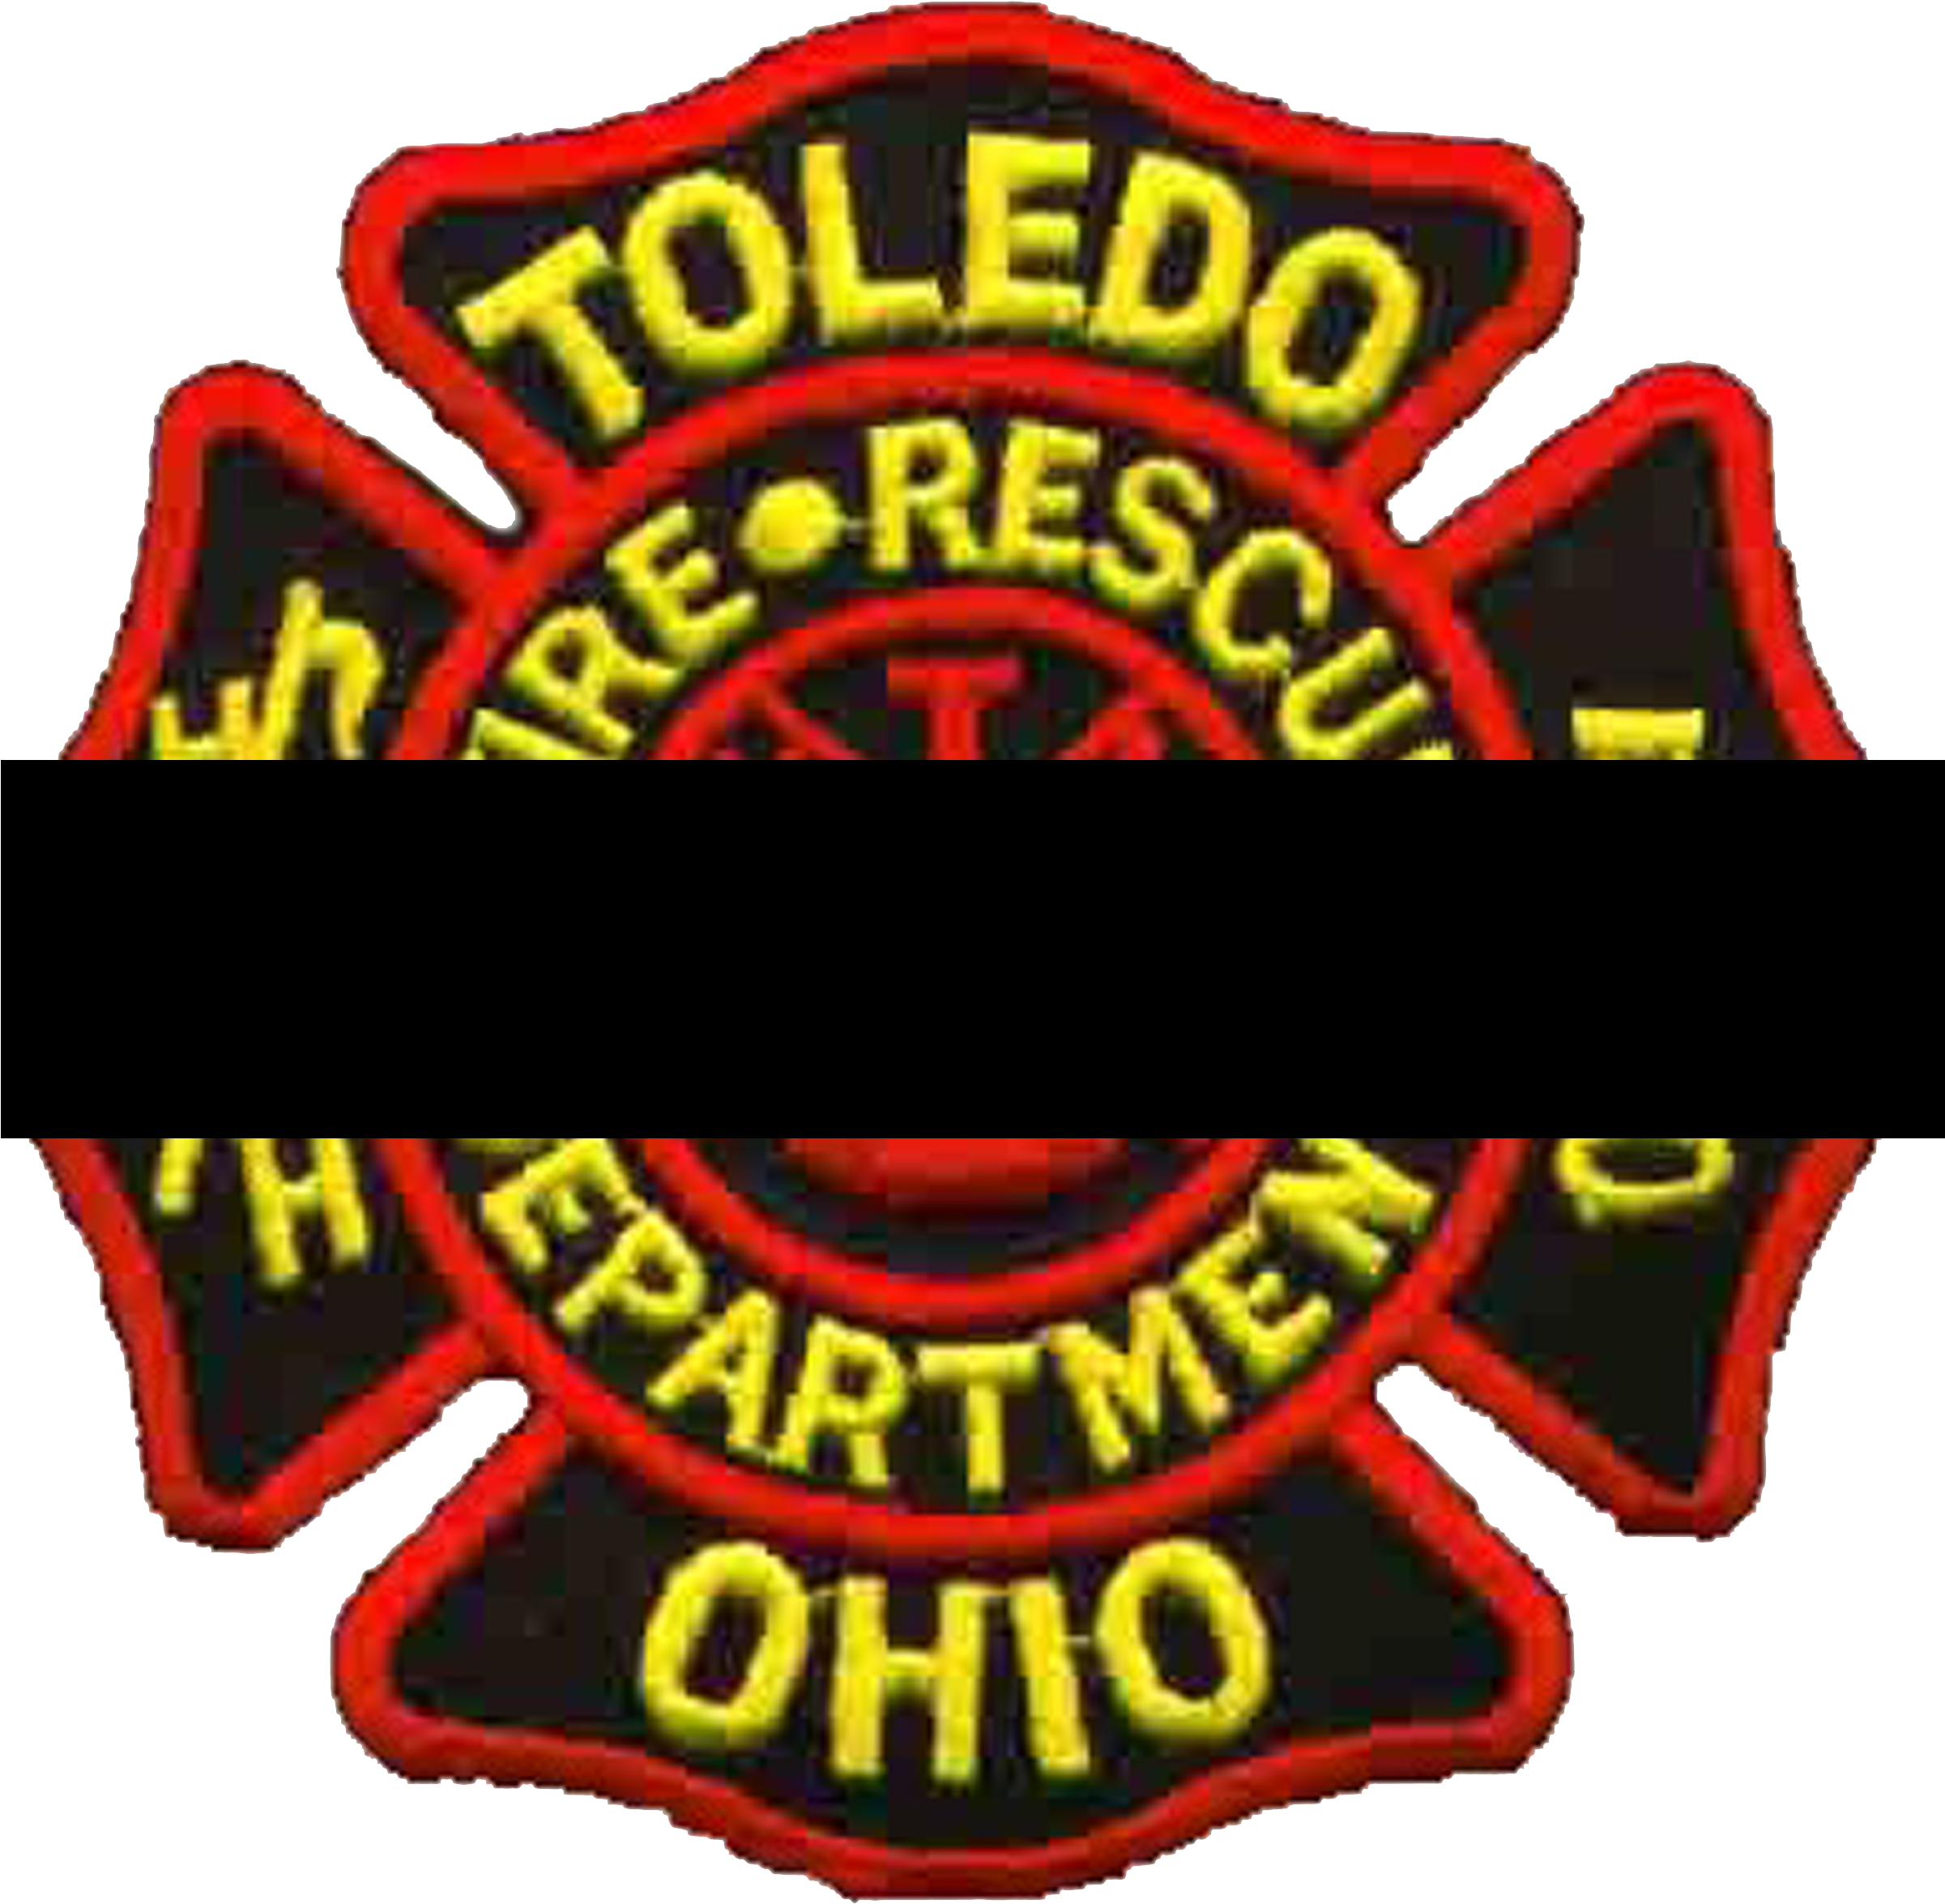 January 26th, - Toledo Fire Department (2400x2400)